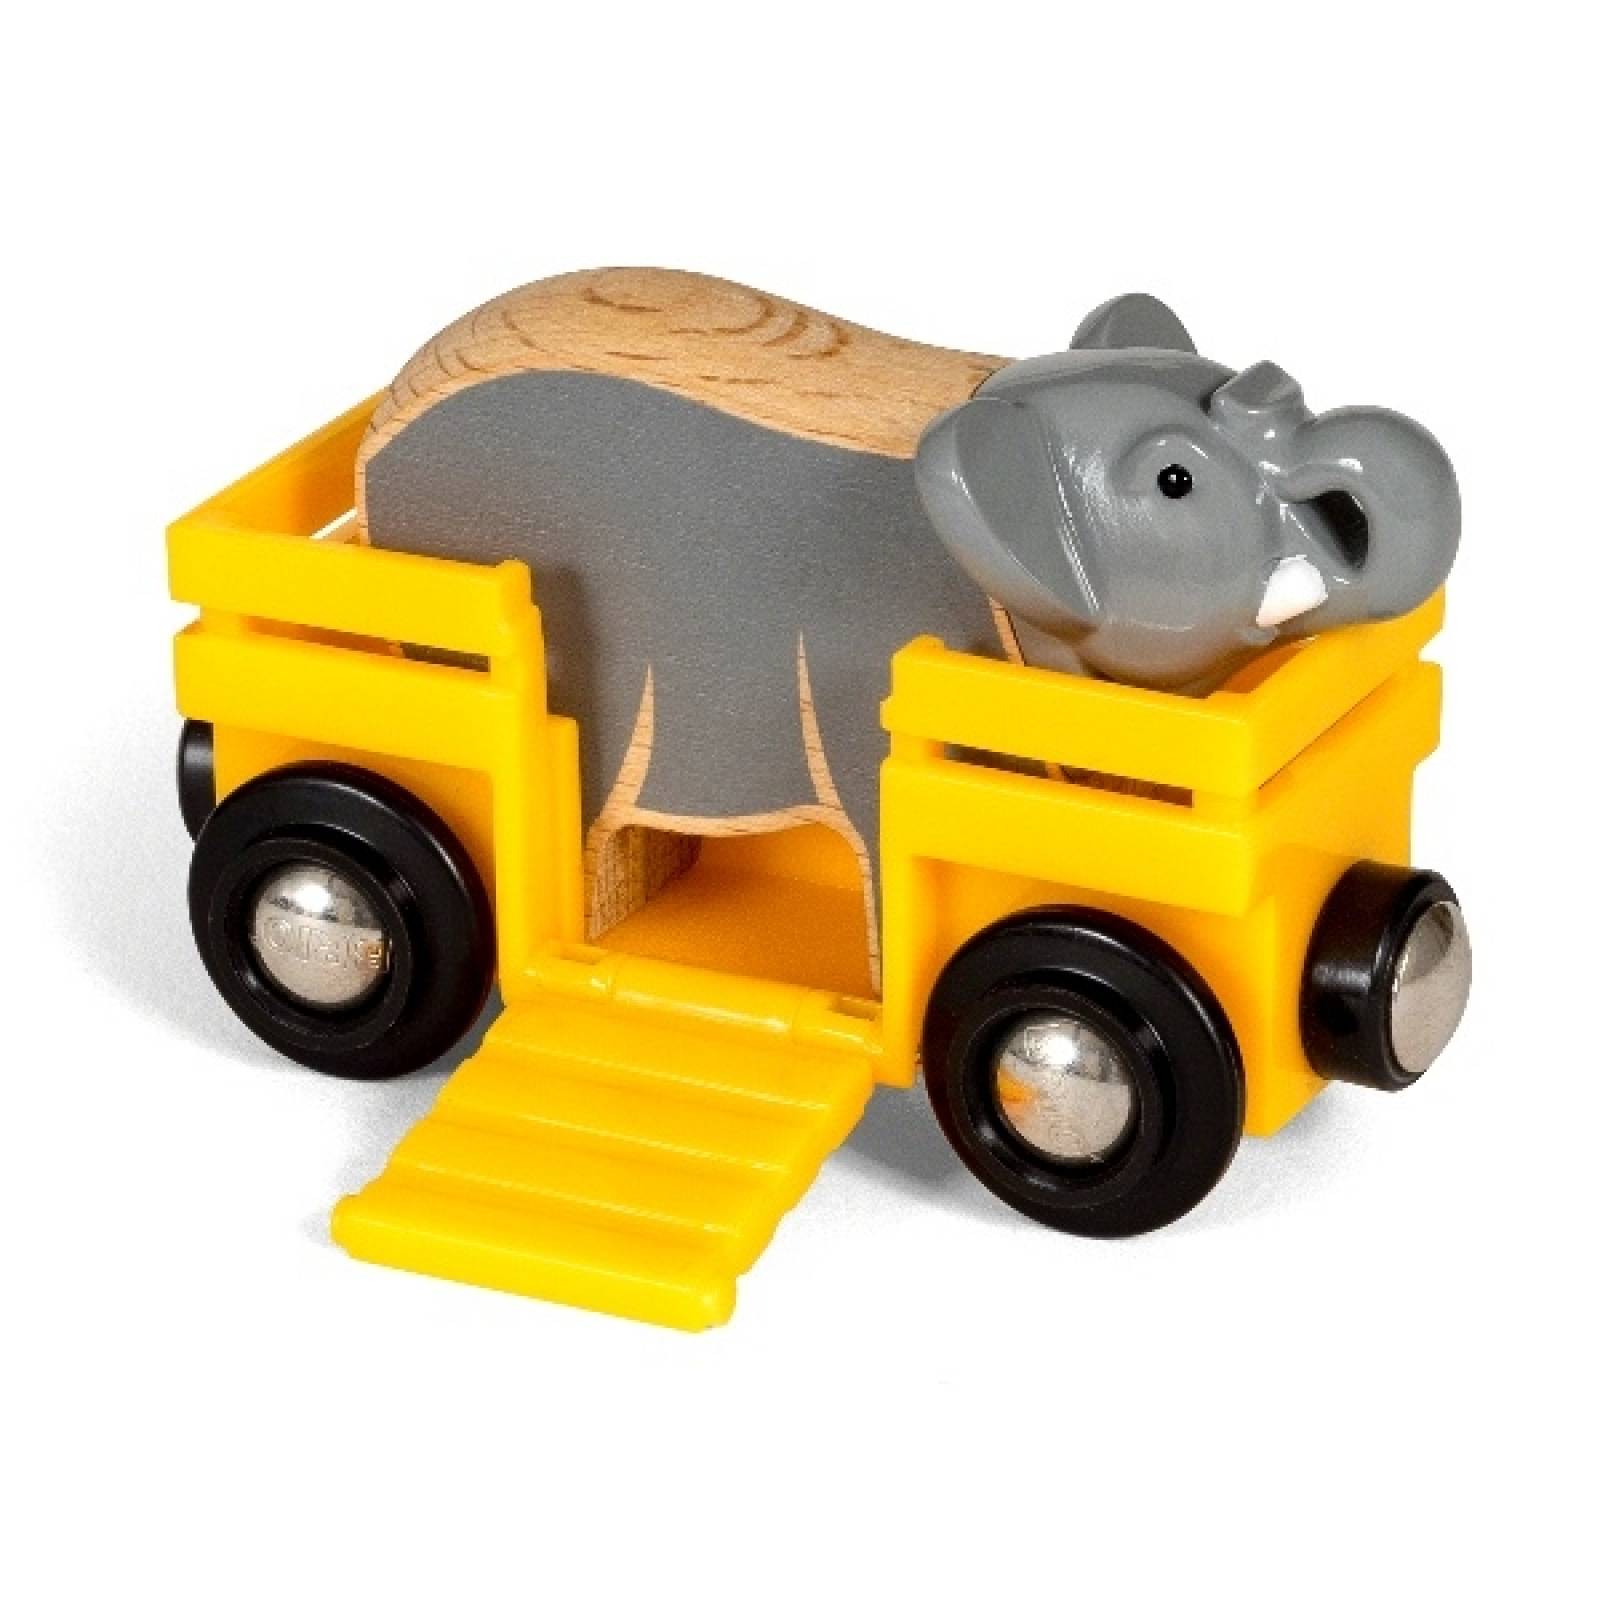 Elephant & Wagon BRIO Wooden Railway Age 3+ thumbnails